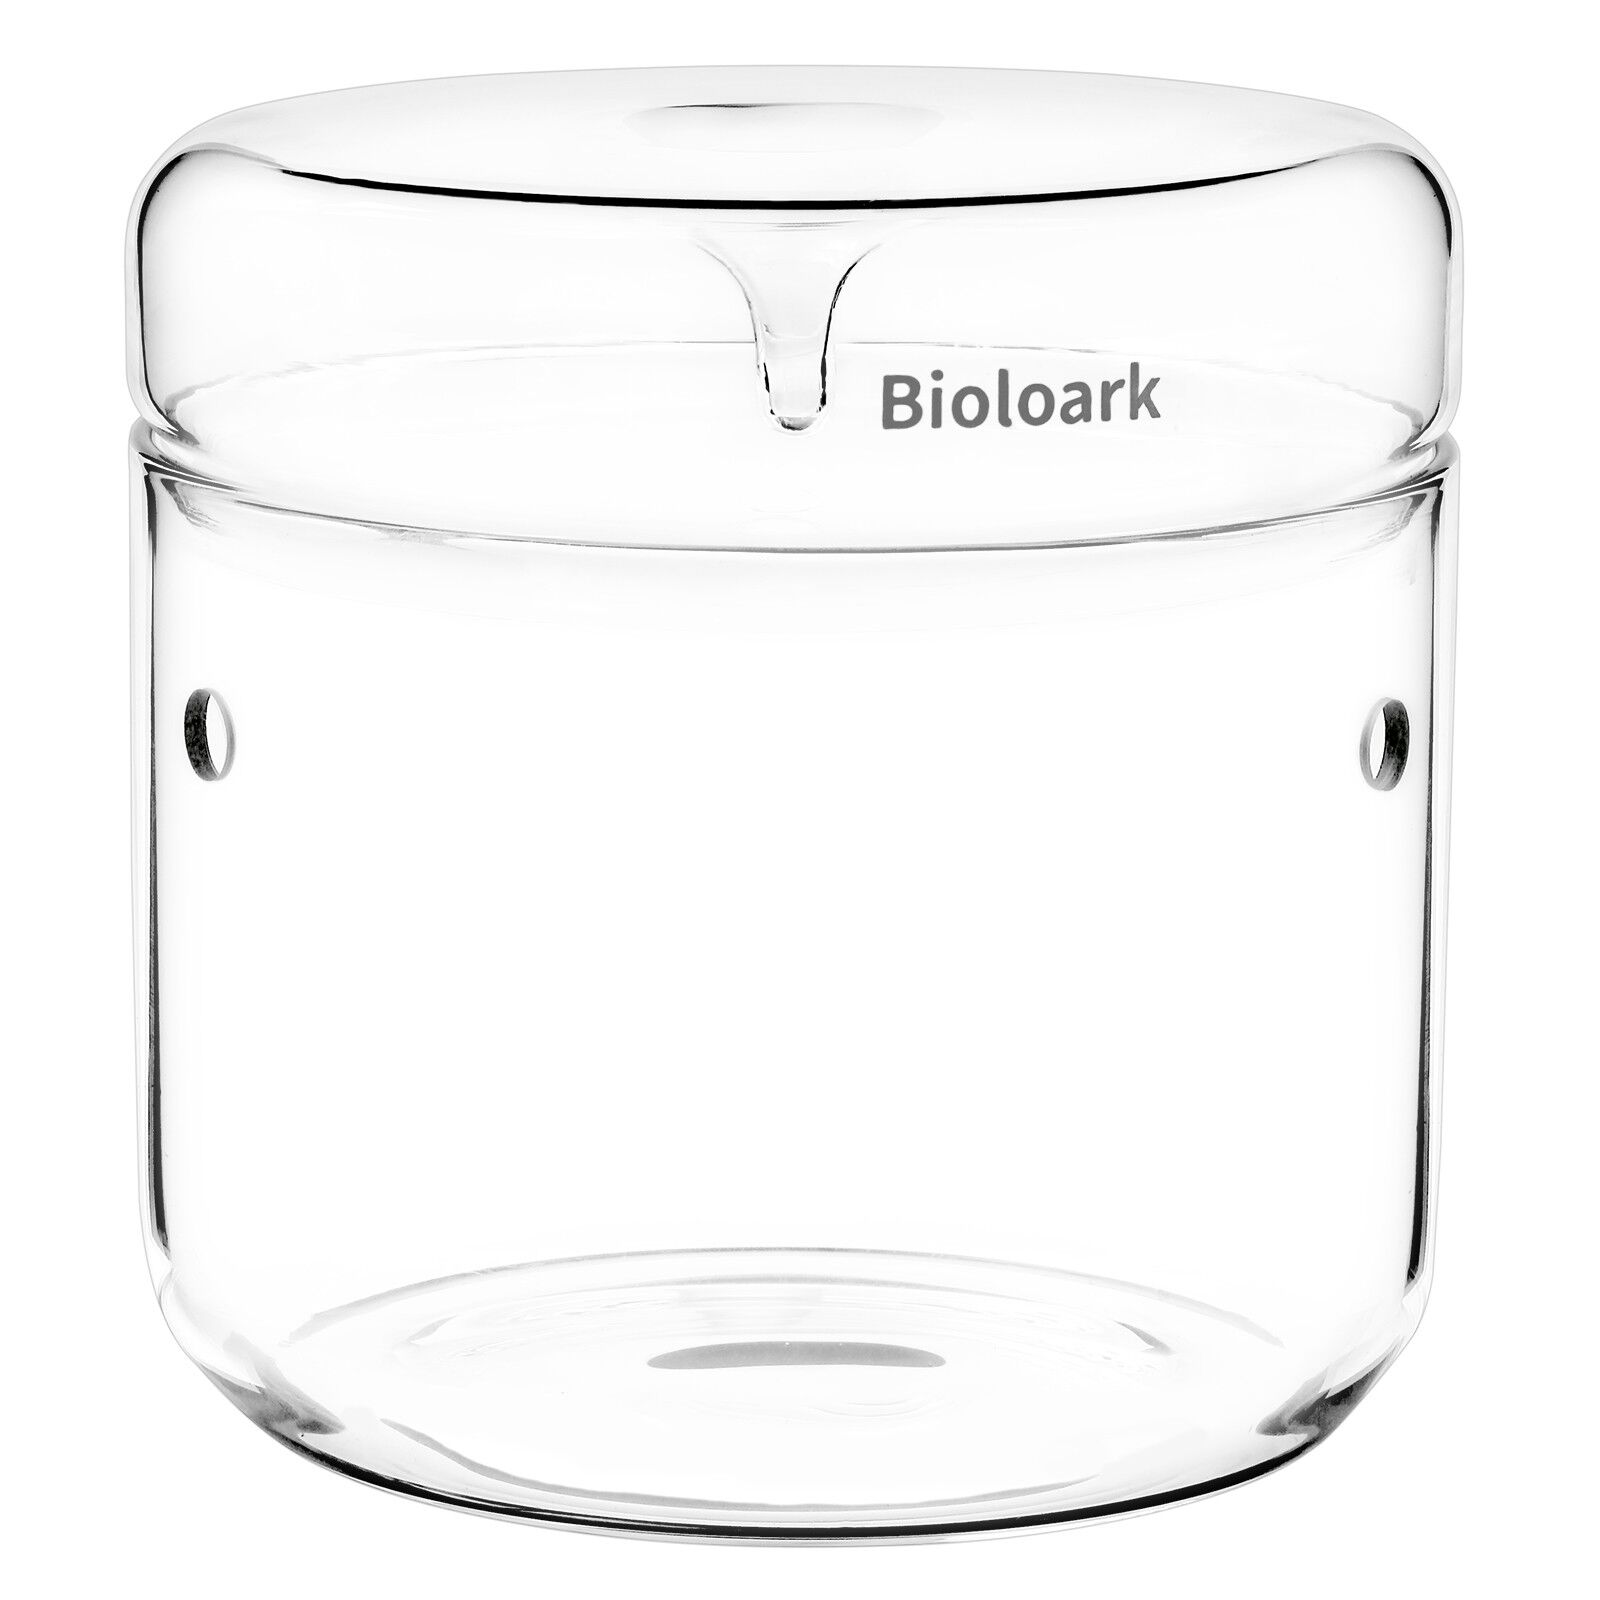 https://www.aquasabi.com/media/image/product/31879/lg/bioloark-luji-glass-cup.jpg